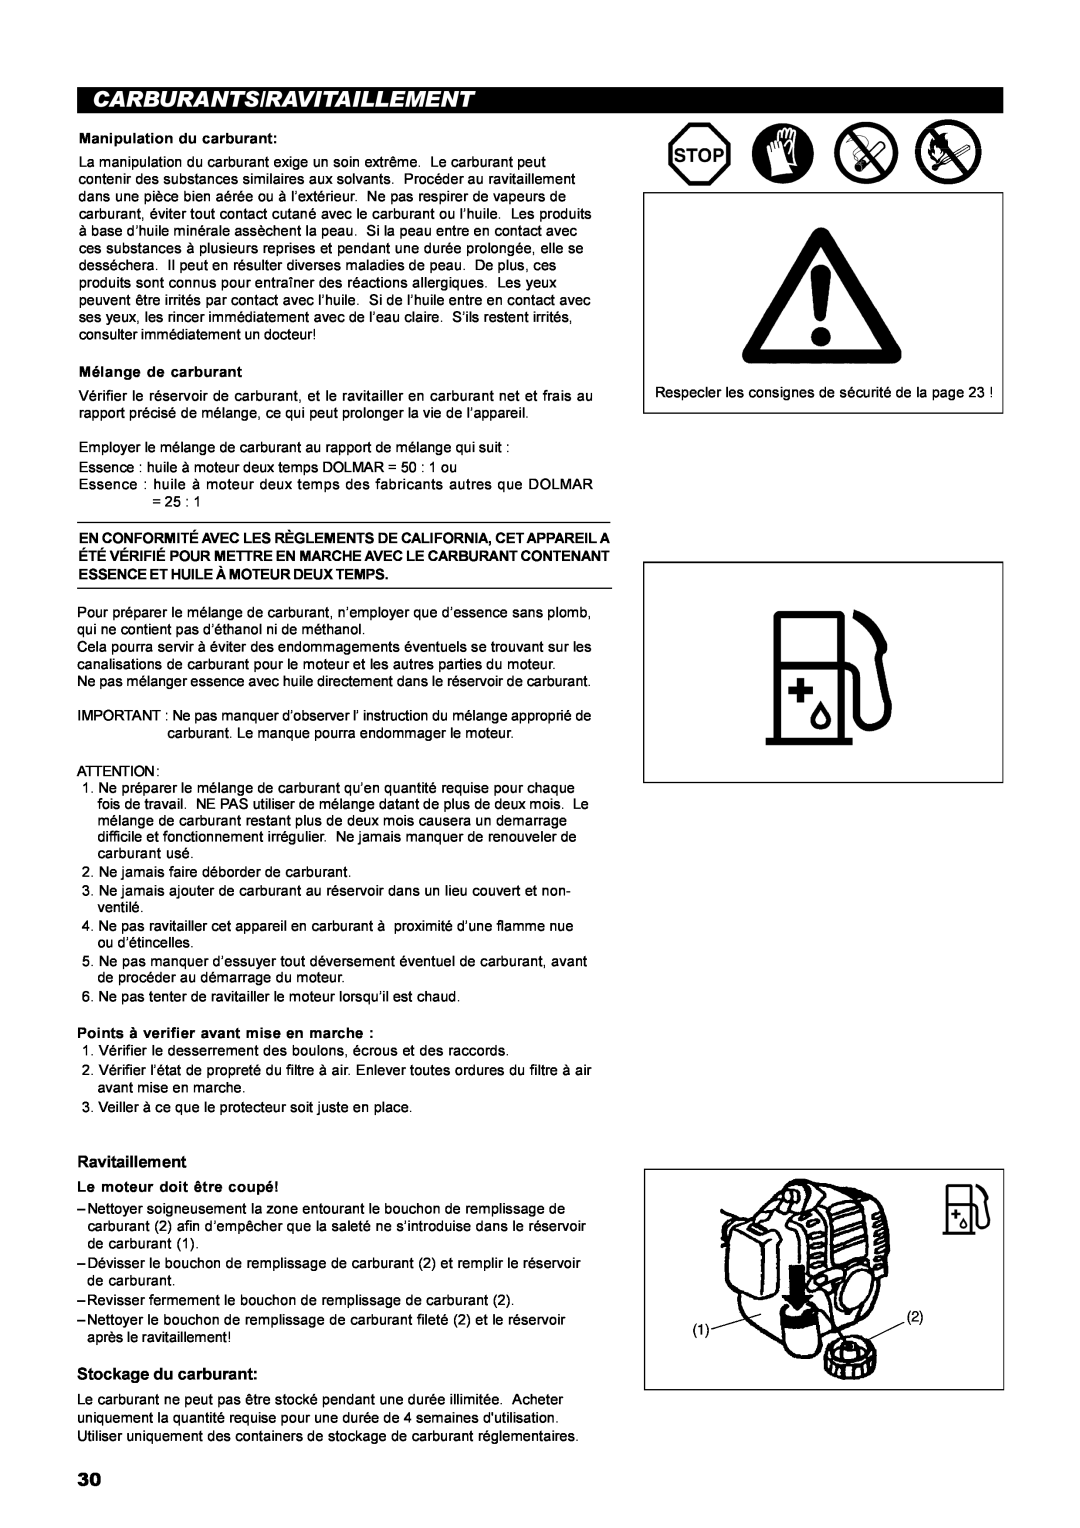 Dolmar MS-22C instruction manual Carburants/Ravitaillement, Stockage du carburant 